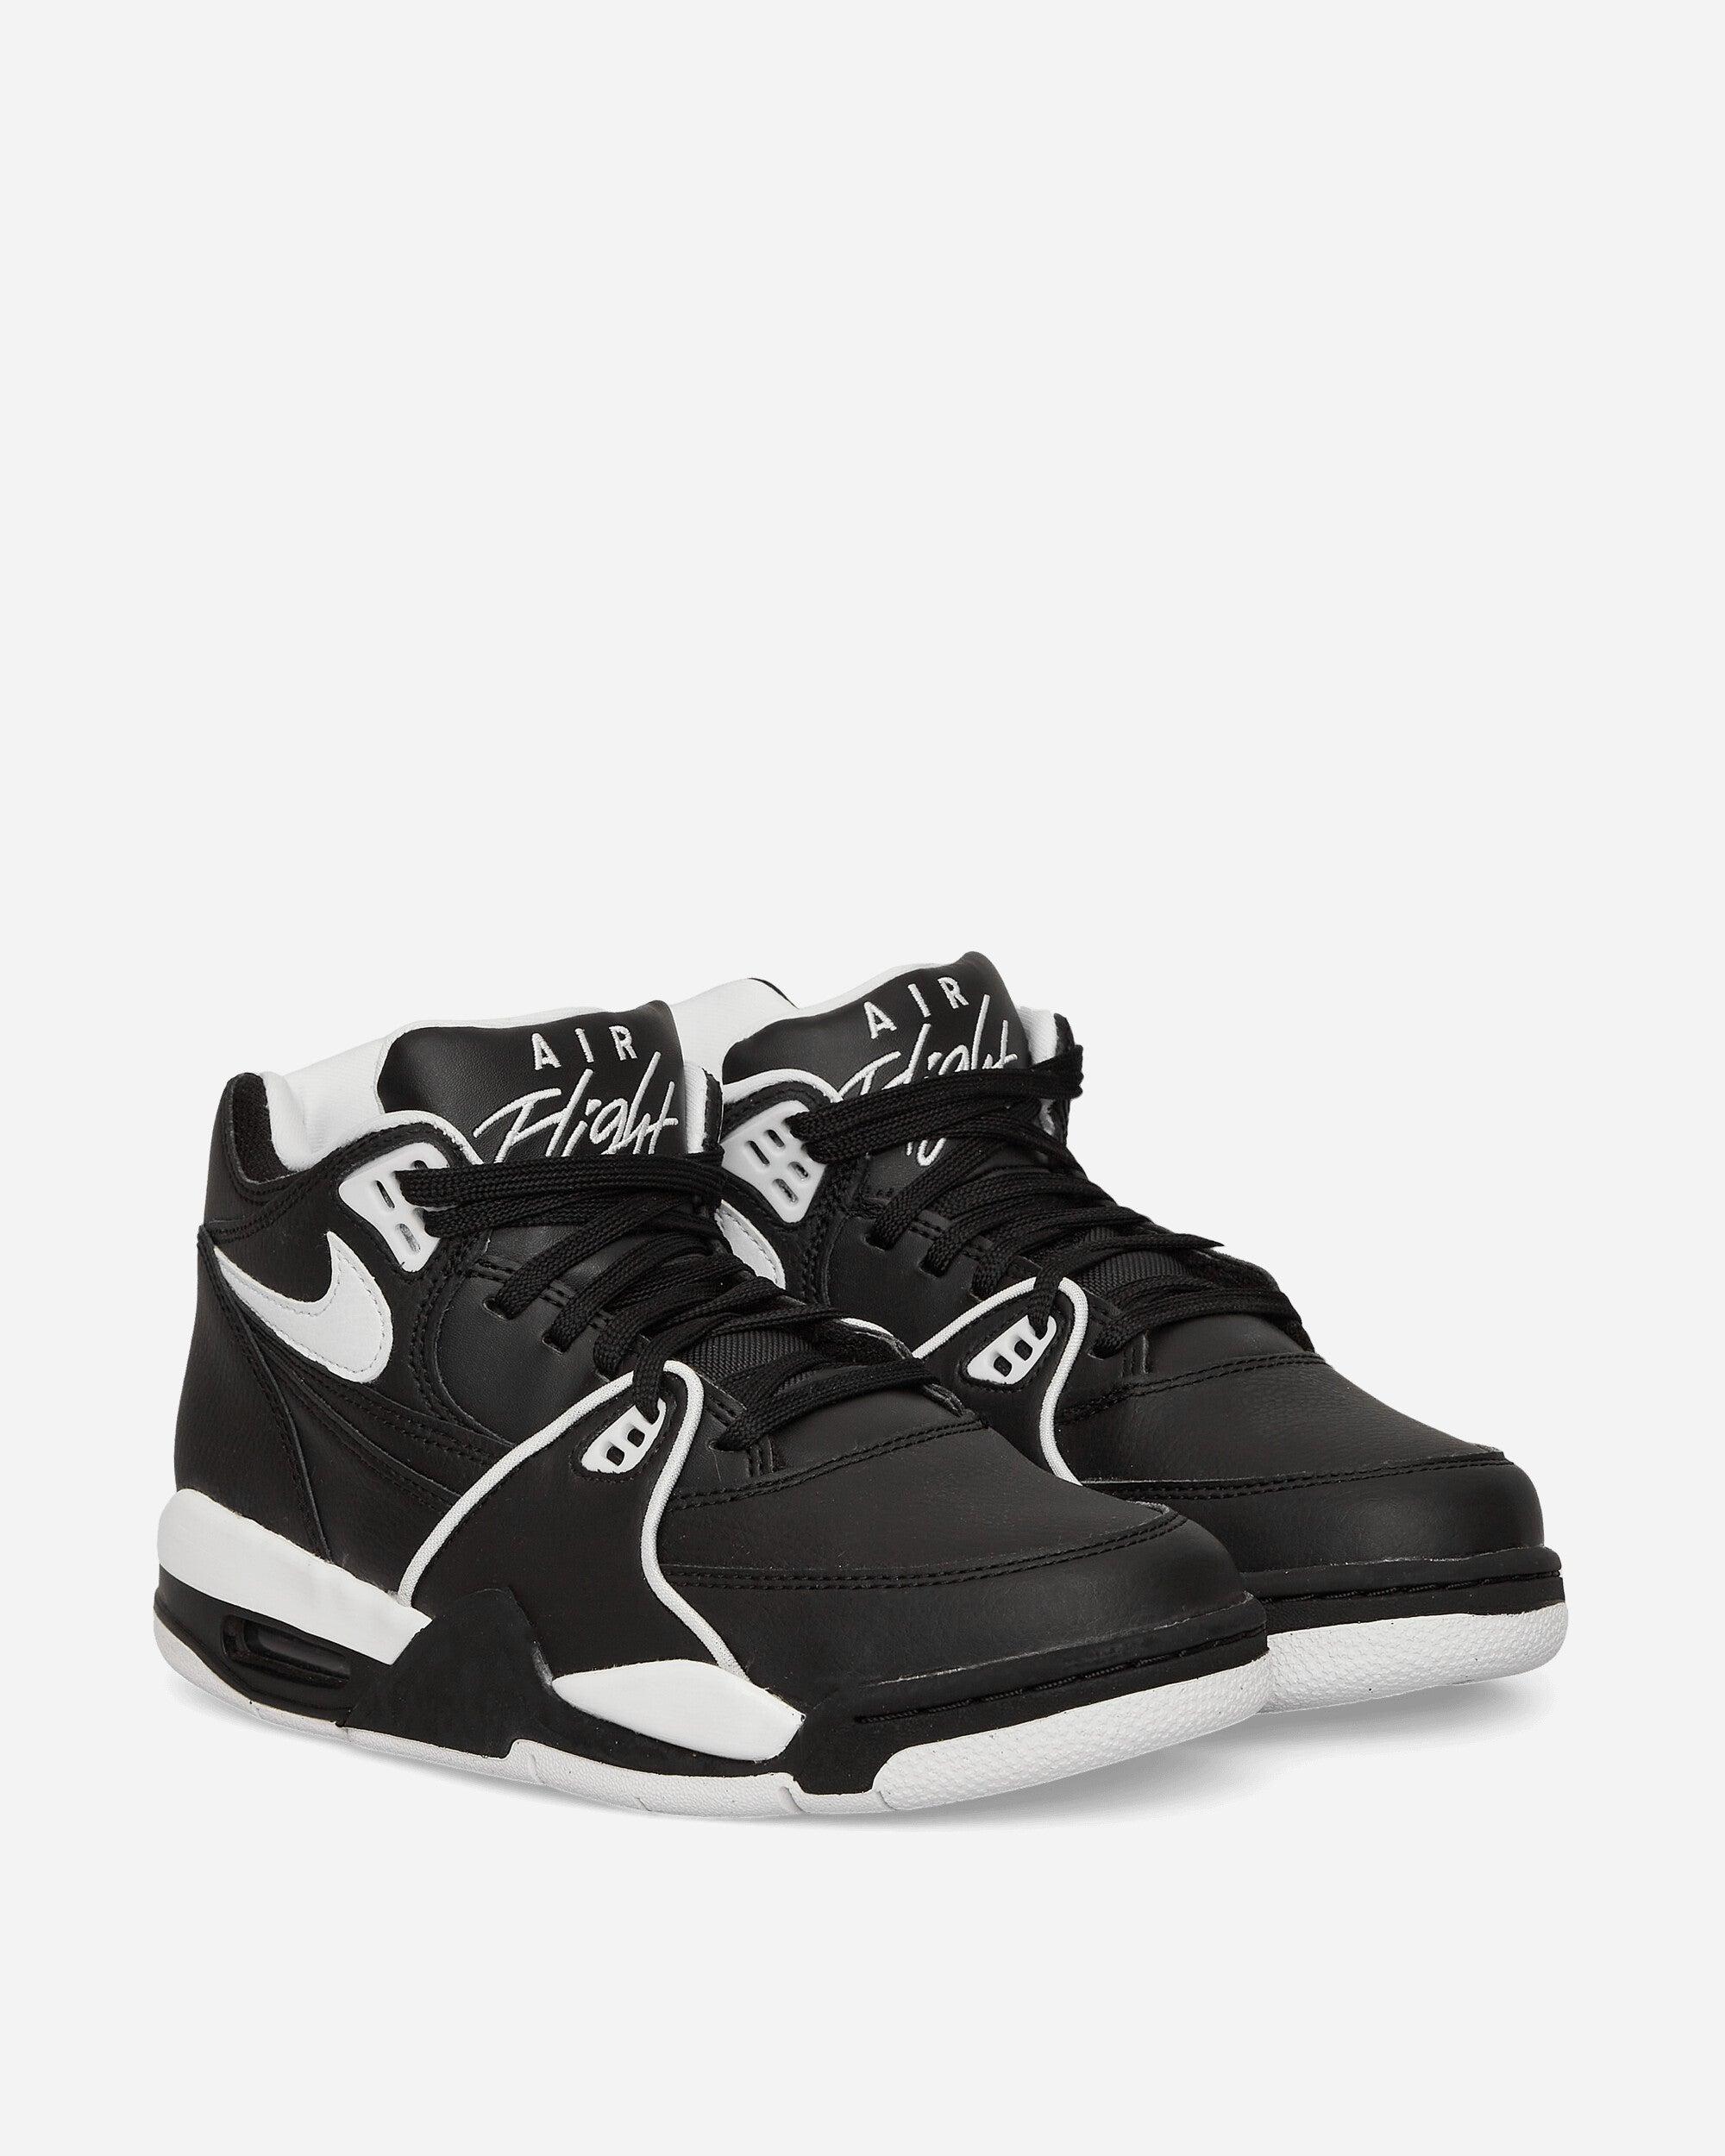 Nike Air Flight 89 Sneakers Black for Men | Lyst